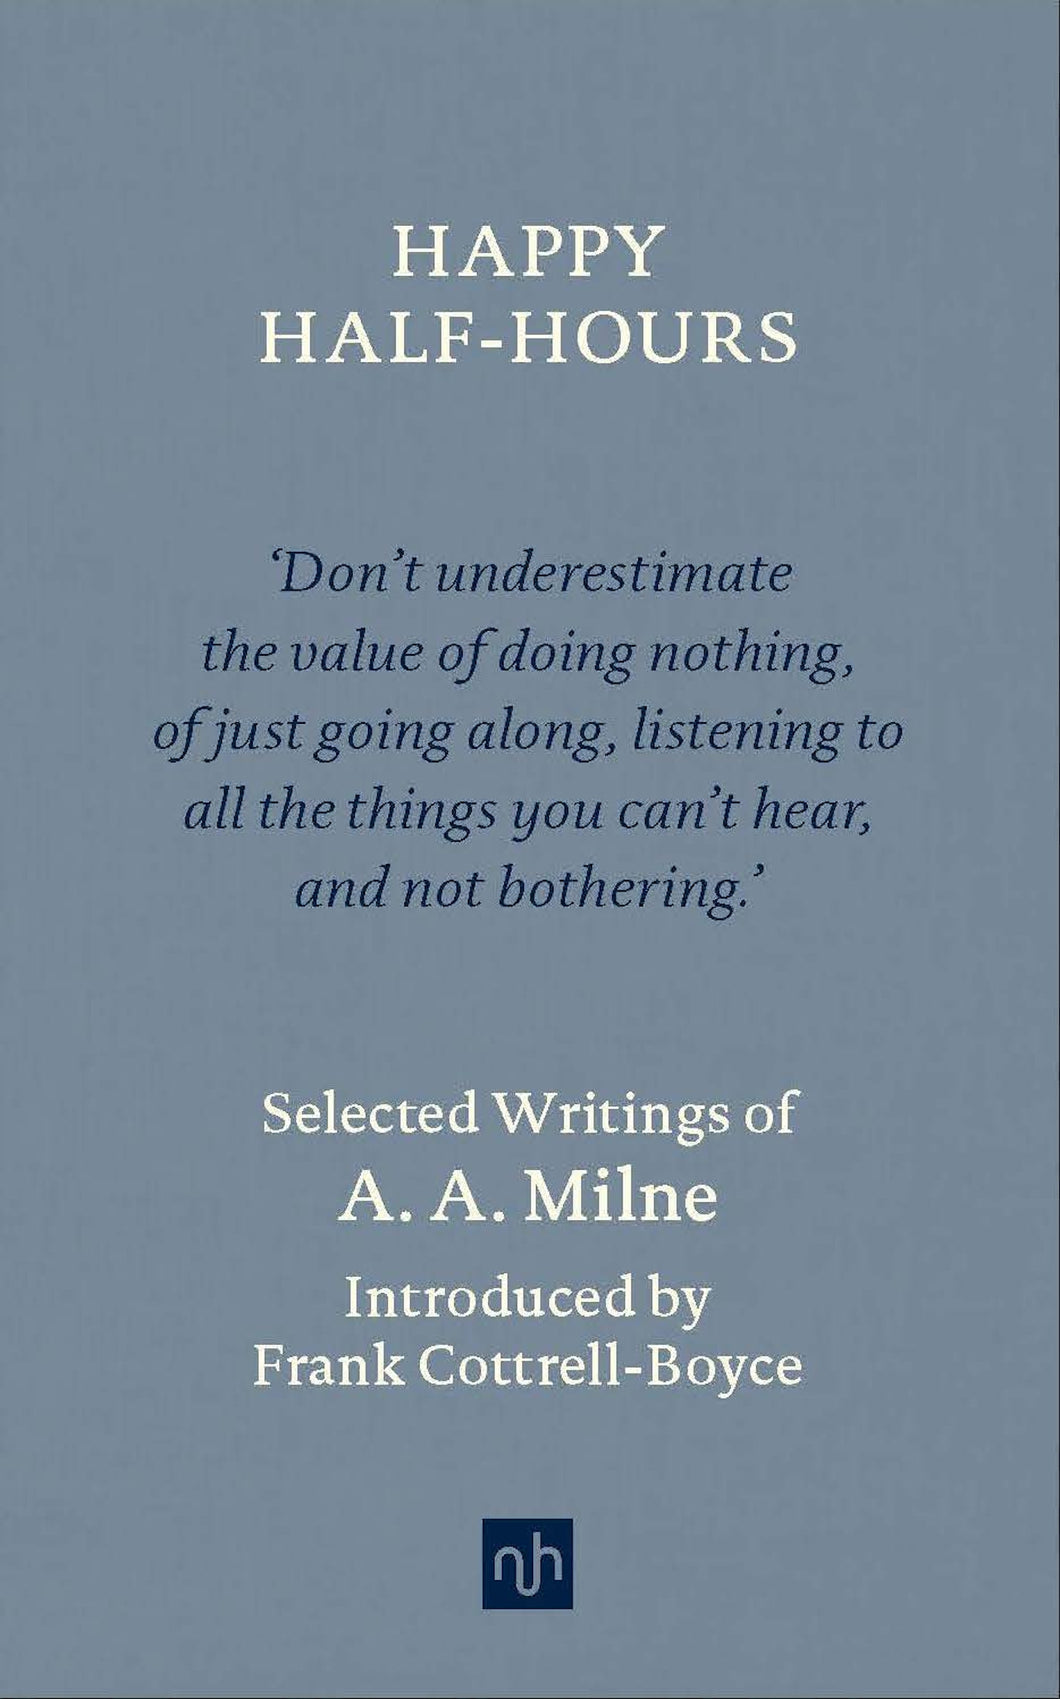 Happy Half-Hours: Selected Writings ร้านหนังสือและสิ่งของ เป็นร้านหนังสือภาษาอังกฤษหายาก และร้านกาแฟ หรือ บุ๊คคาเฟ่ ตั้งอยู่สุขุมวิท กรุงเทพ